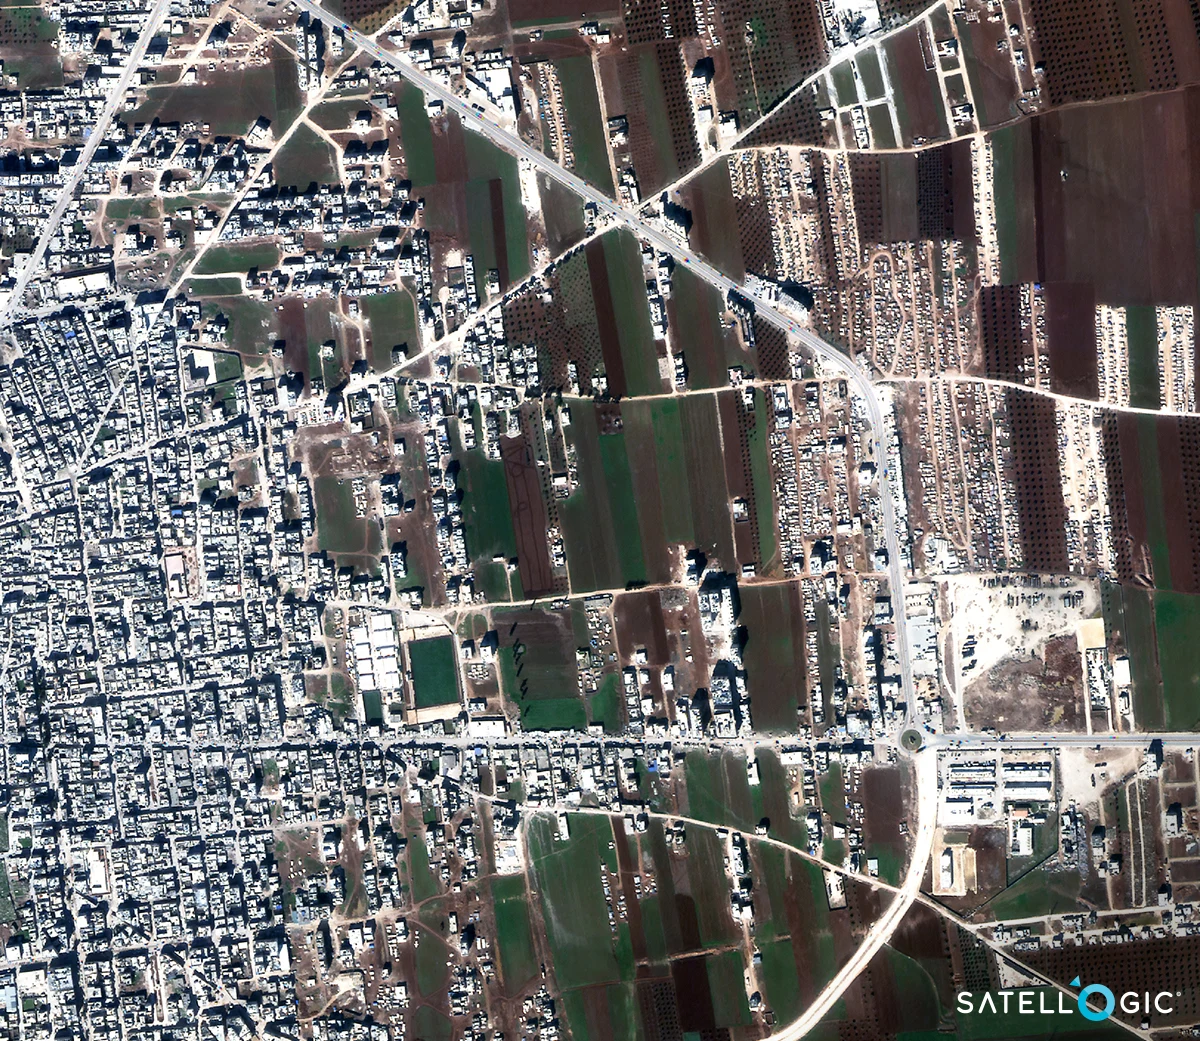 Earthquake in A'zaz, Syria